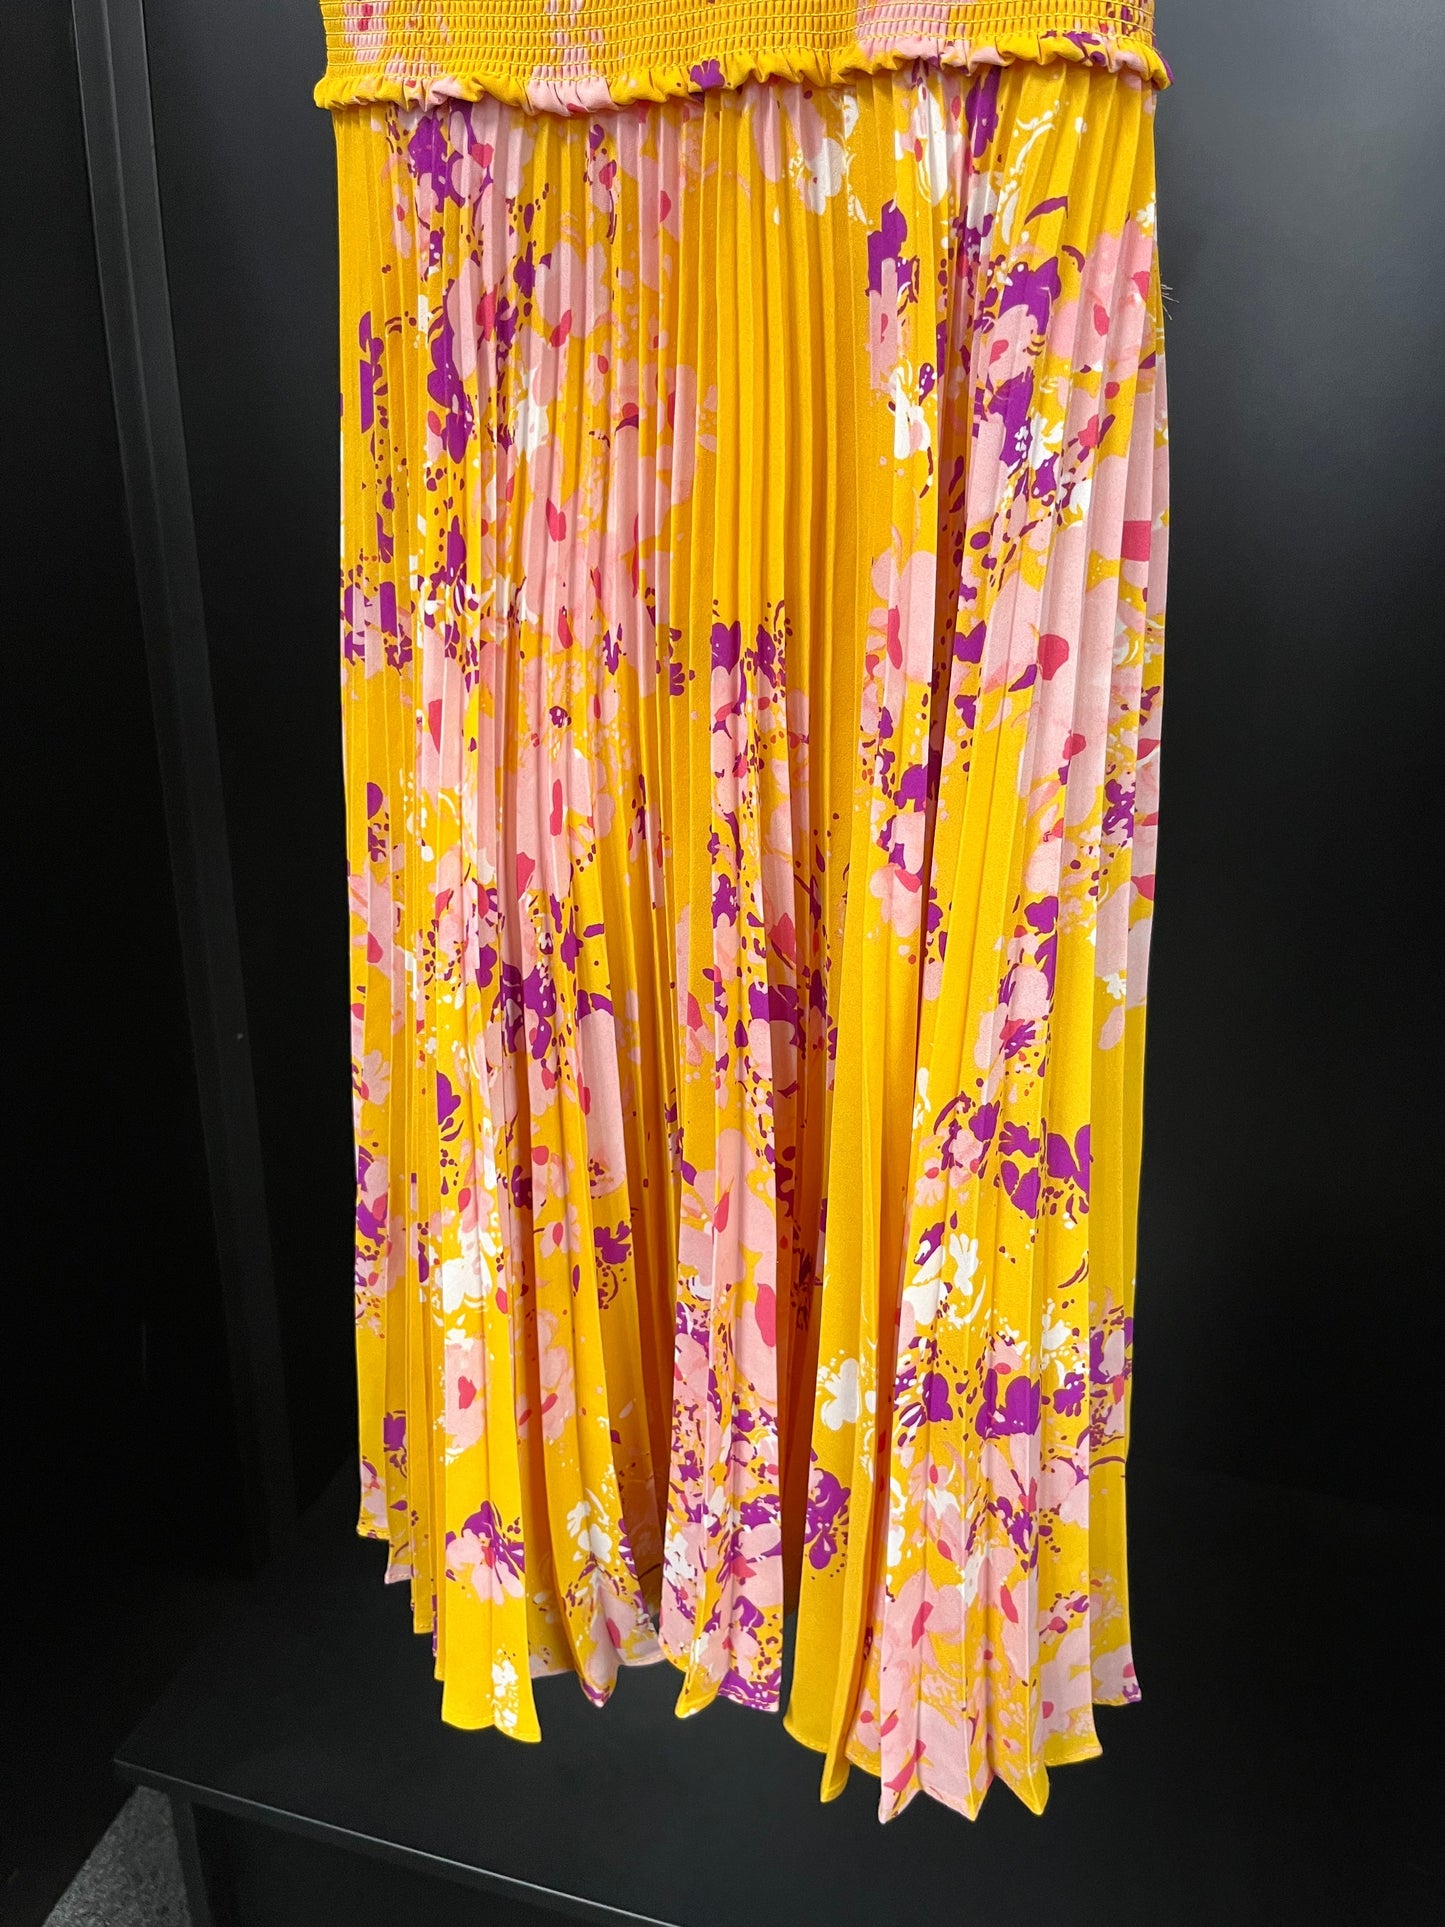 Dress Casual Midi By Nanette Lepore NWT  Size: 8